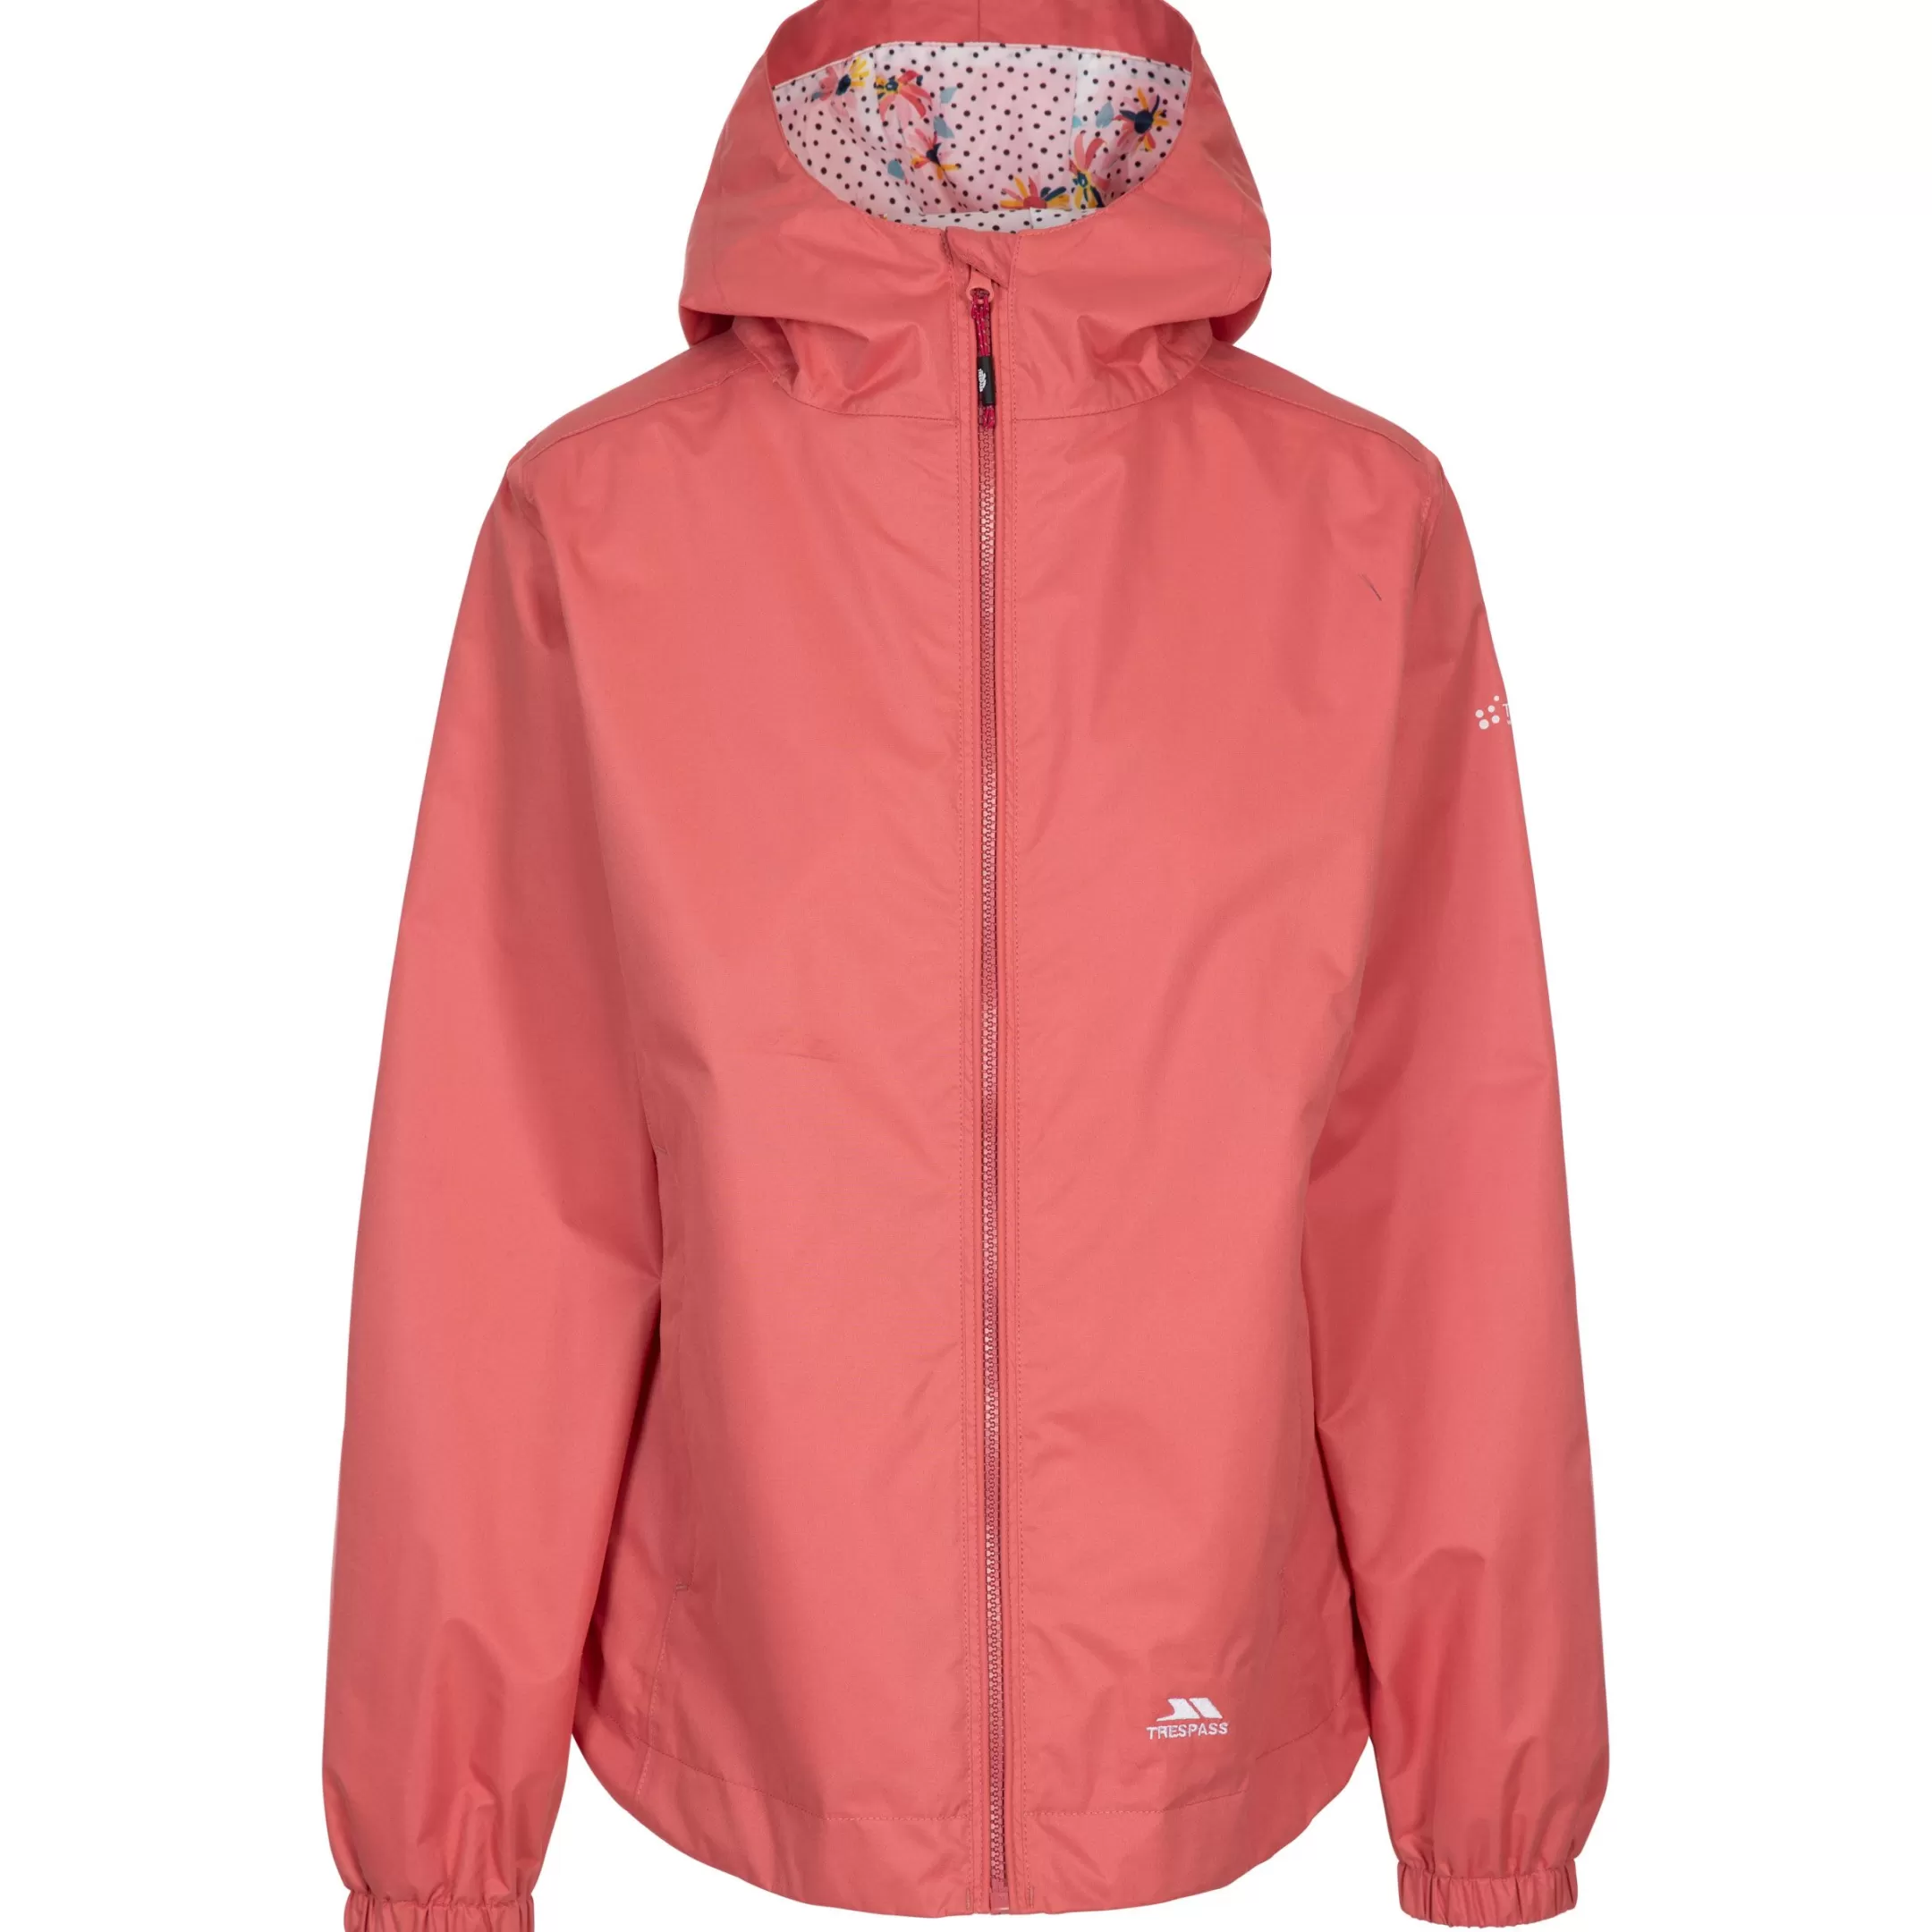 Womens Waterproof Shell Jacket Rosneath | Trespass Outlet